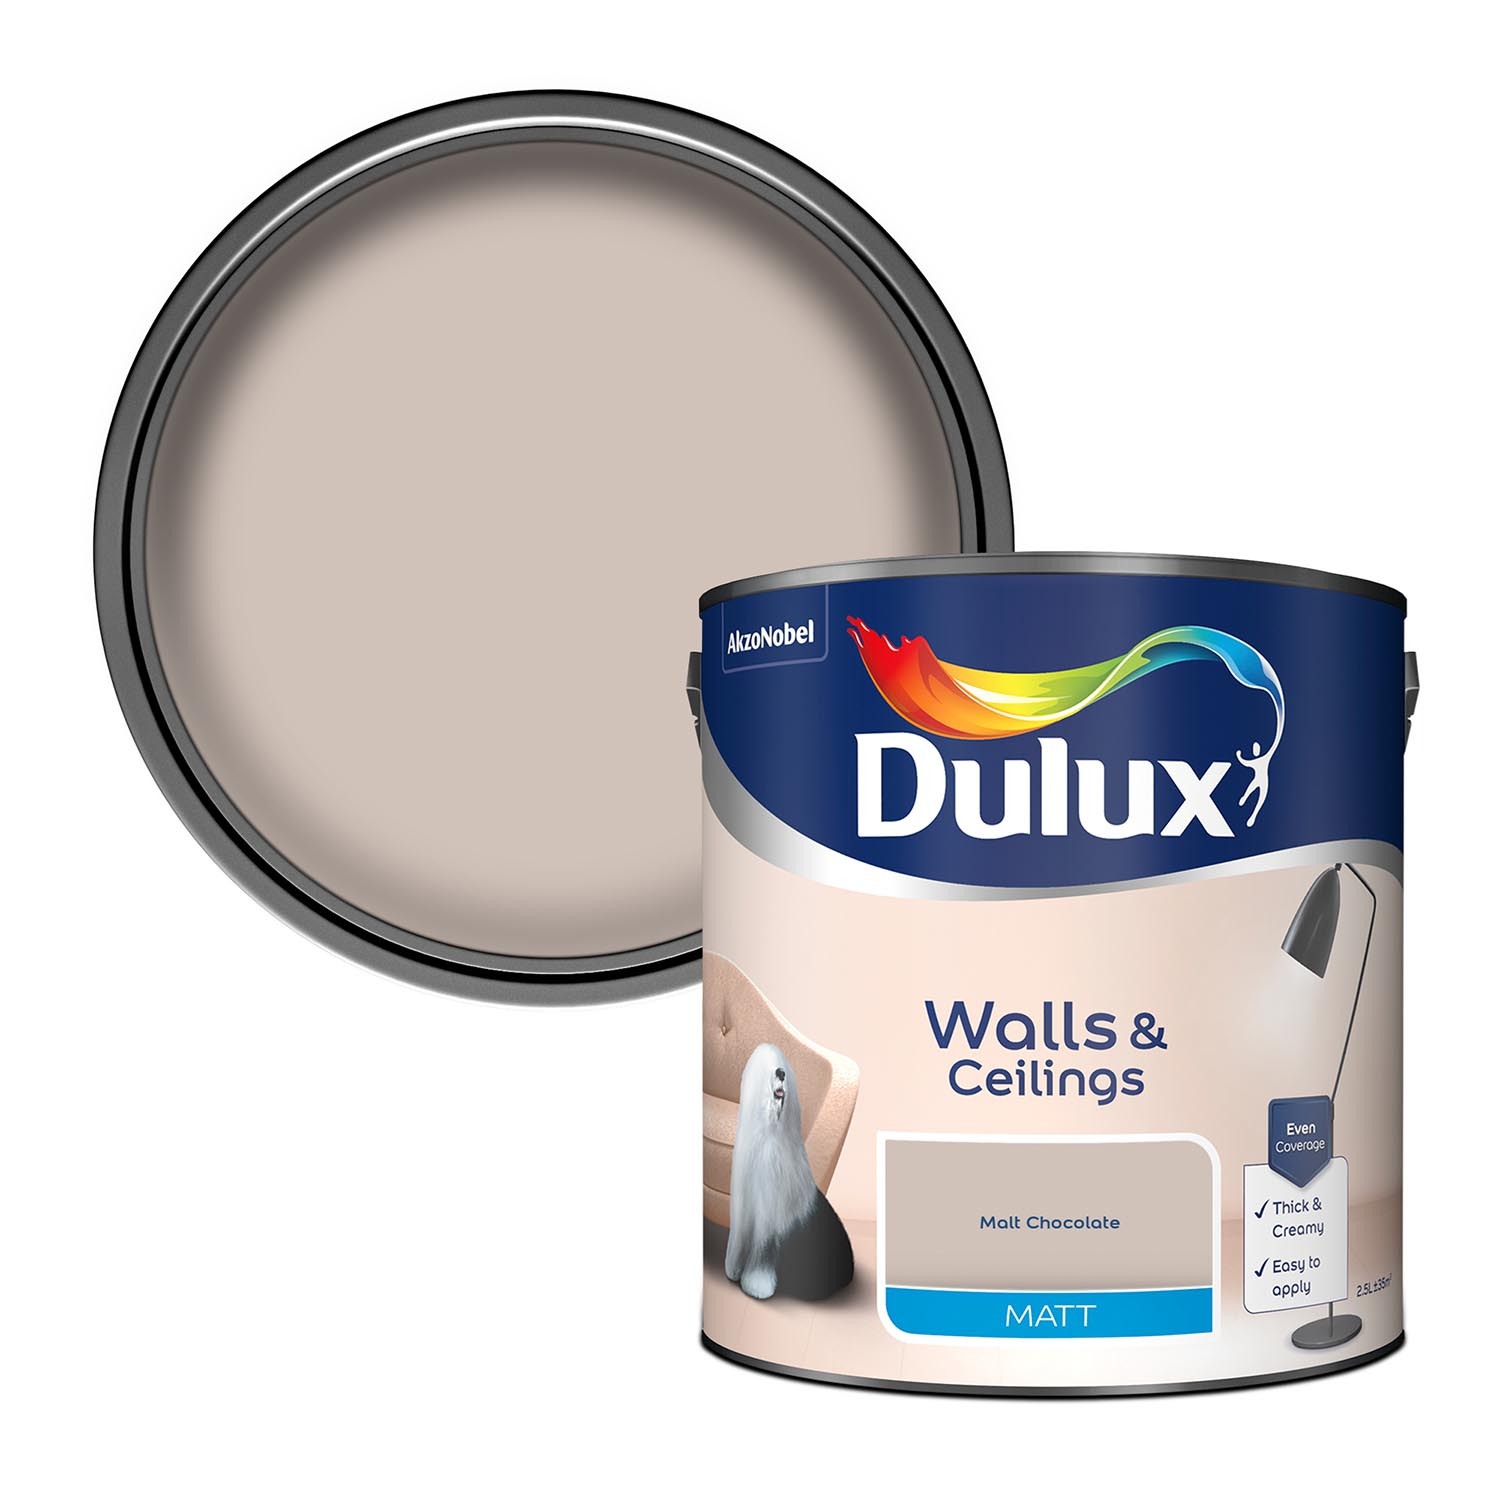 Dulux Walls and Ceilings Malt Chocolate Matt Emulsion Paint 2.5L Image 1